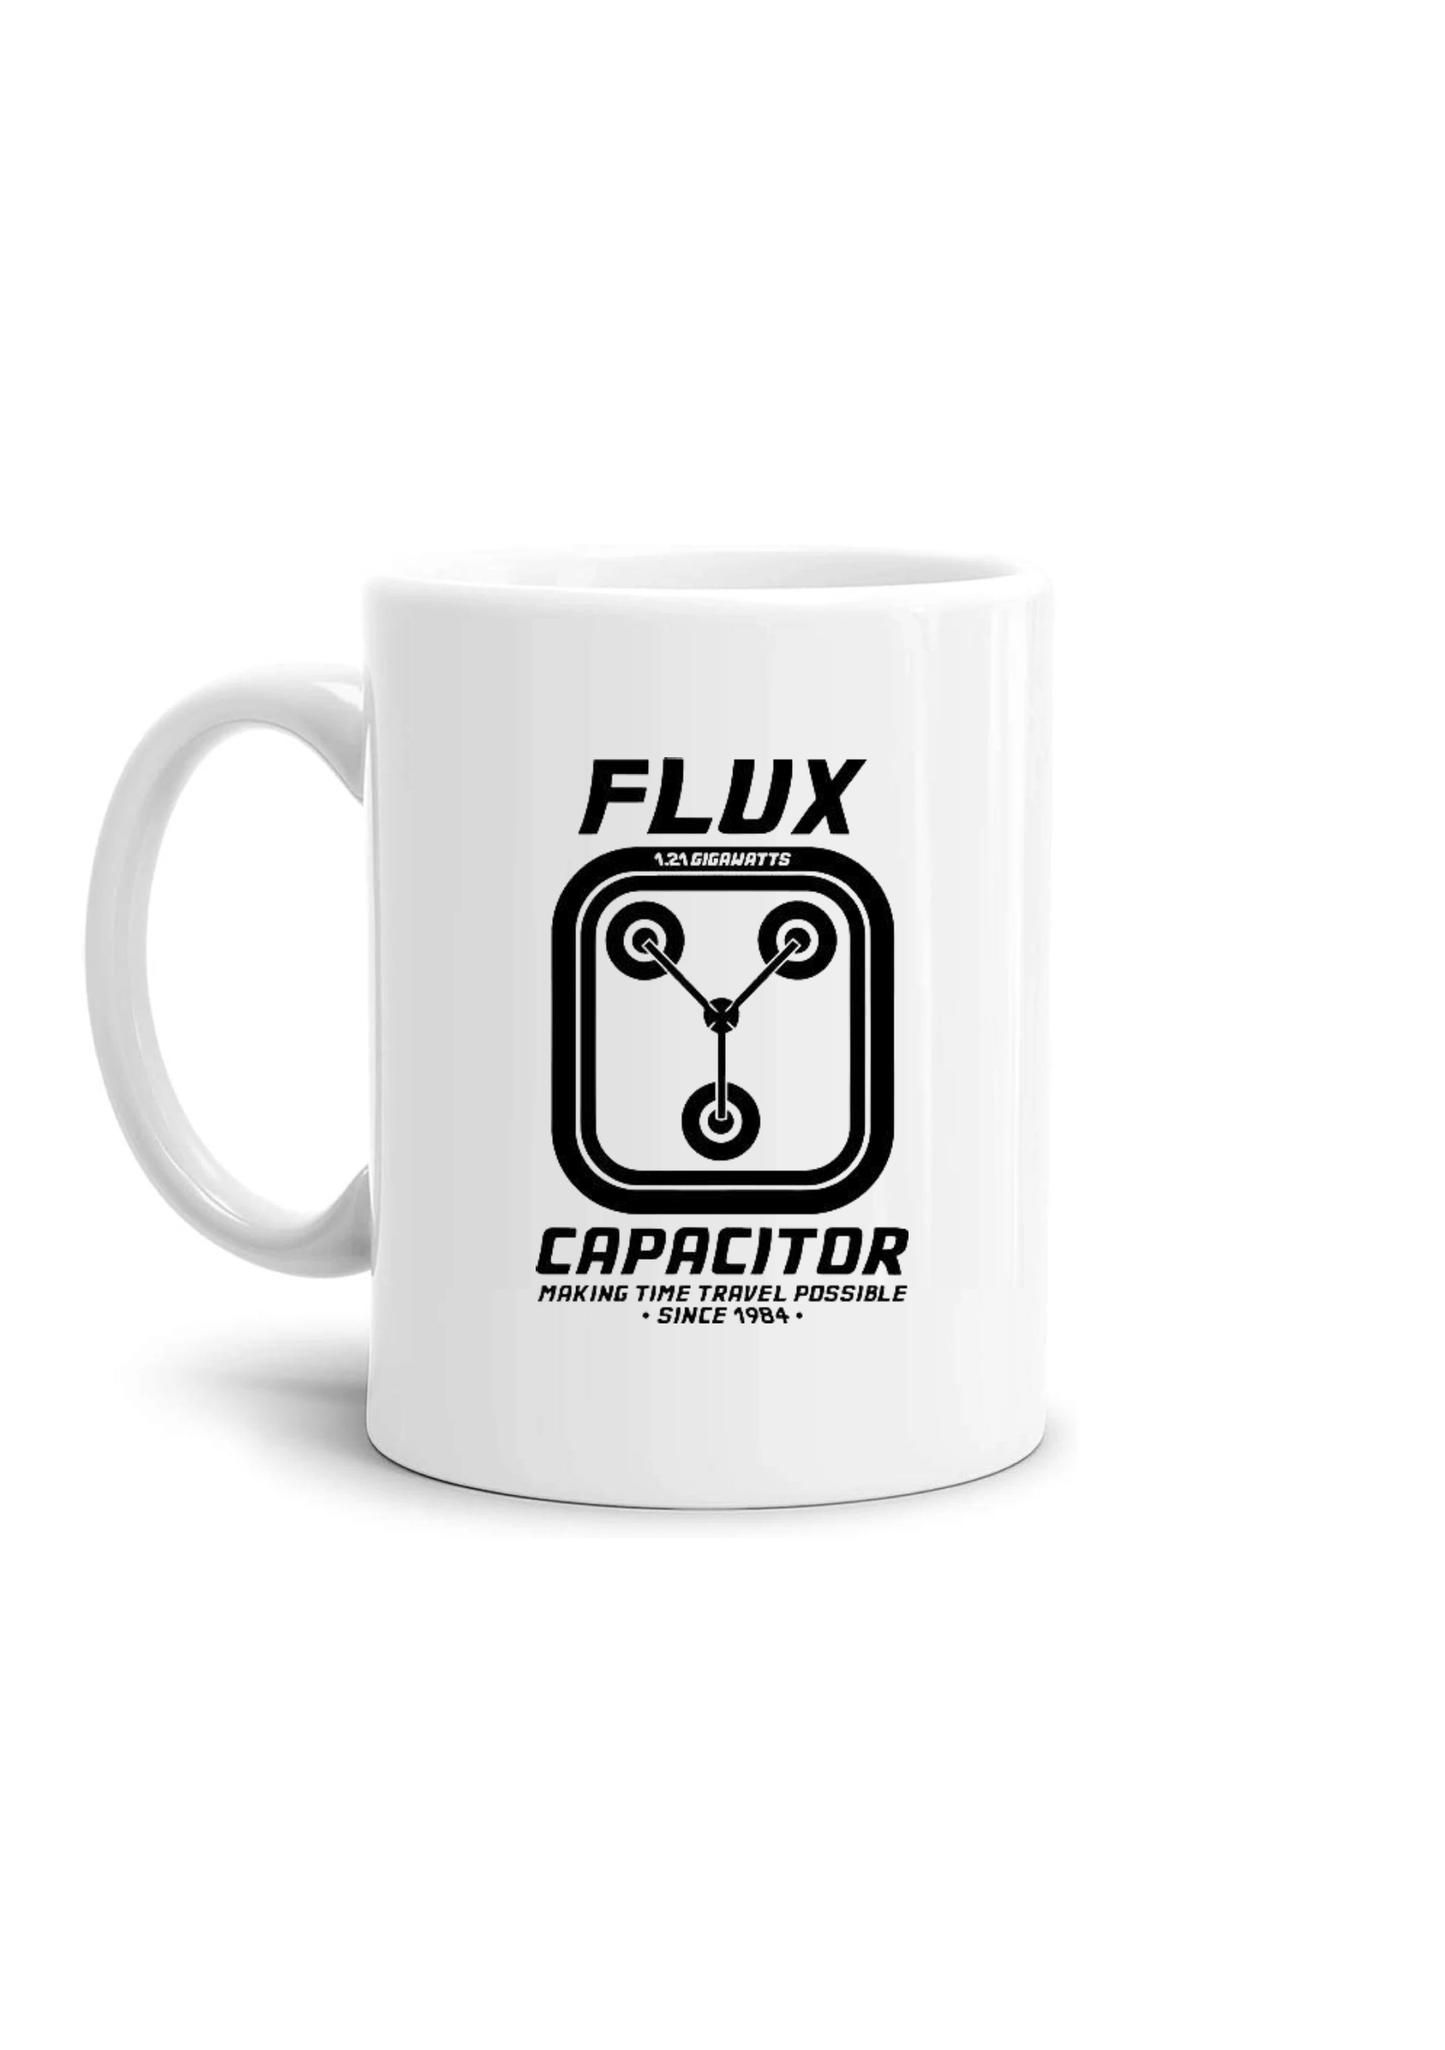 Mug-flow channeler cup future